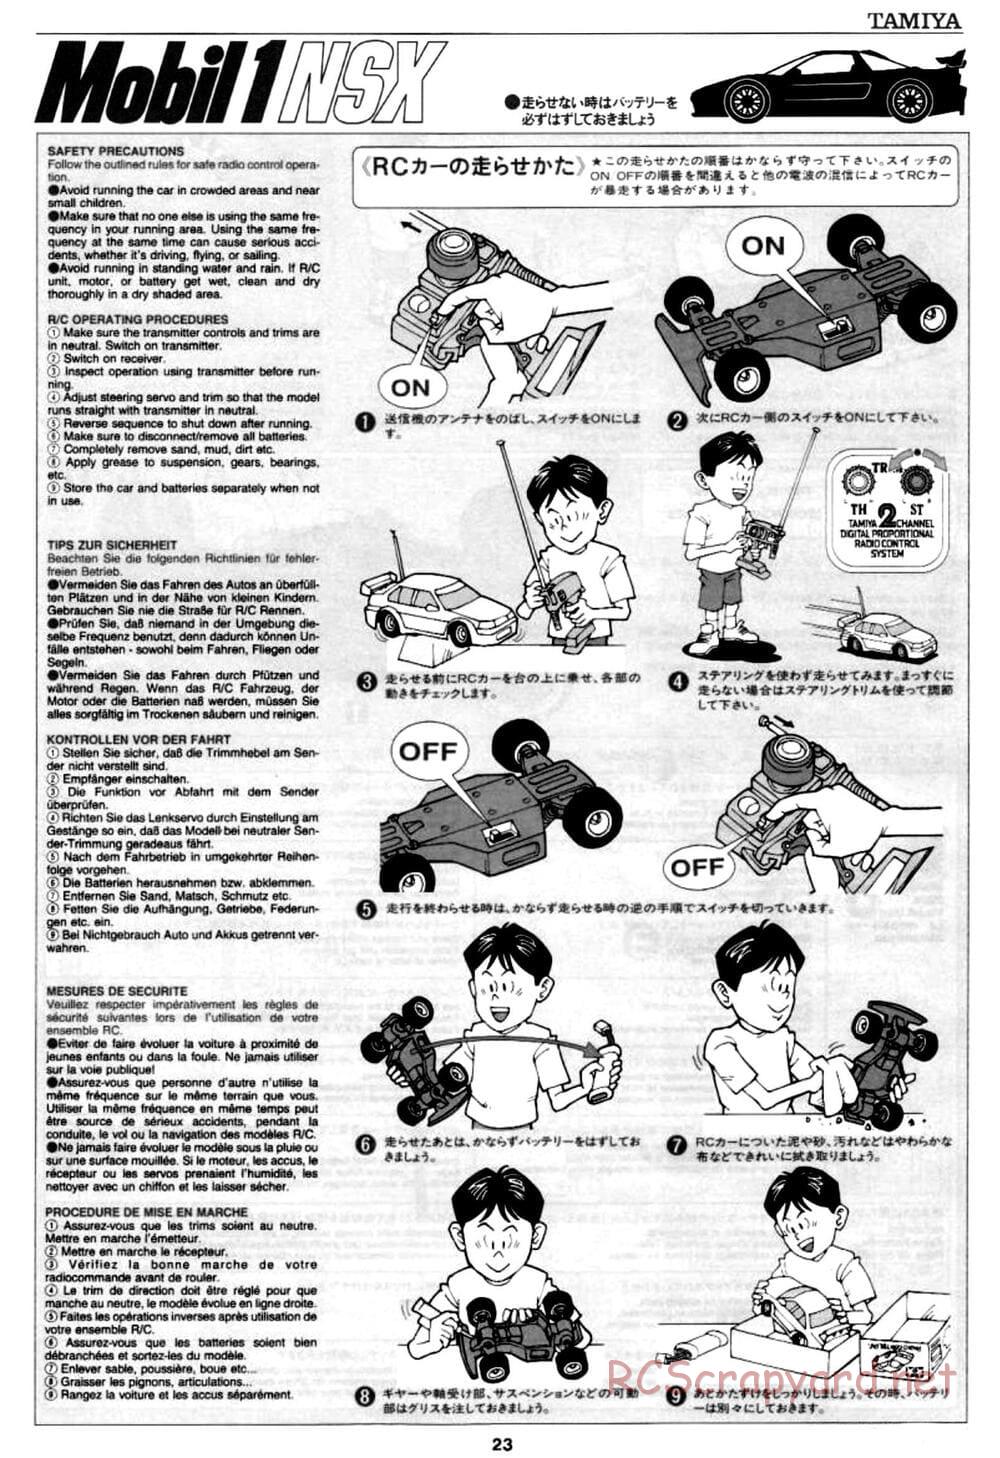 Tamiya - Mobil 1 NSX - TA-03R Chassis - Manual - Page 23